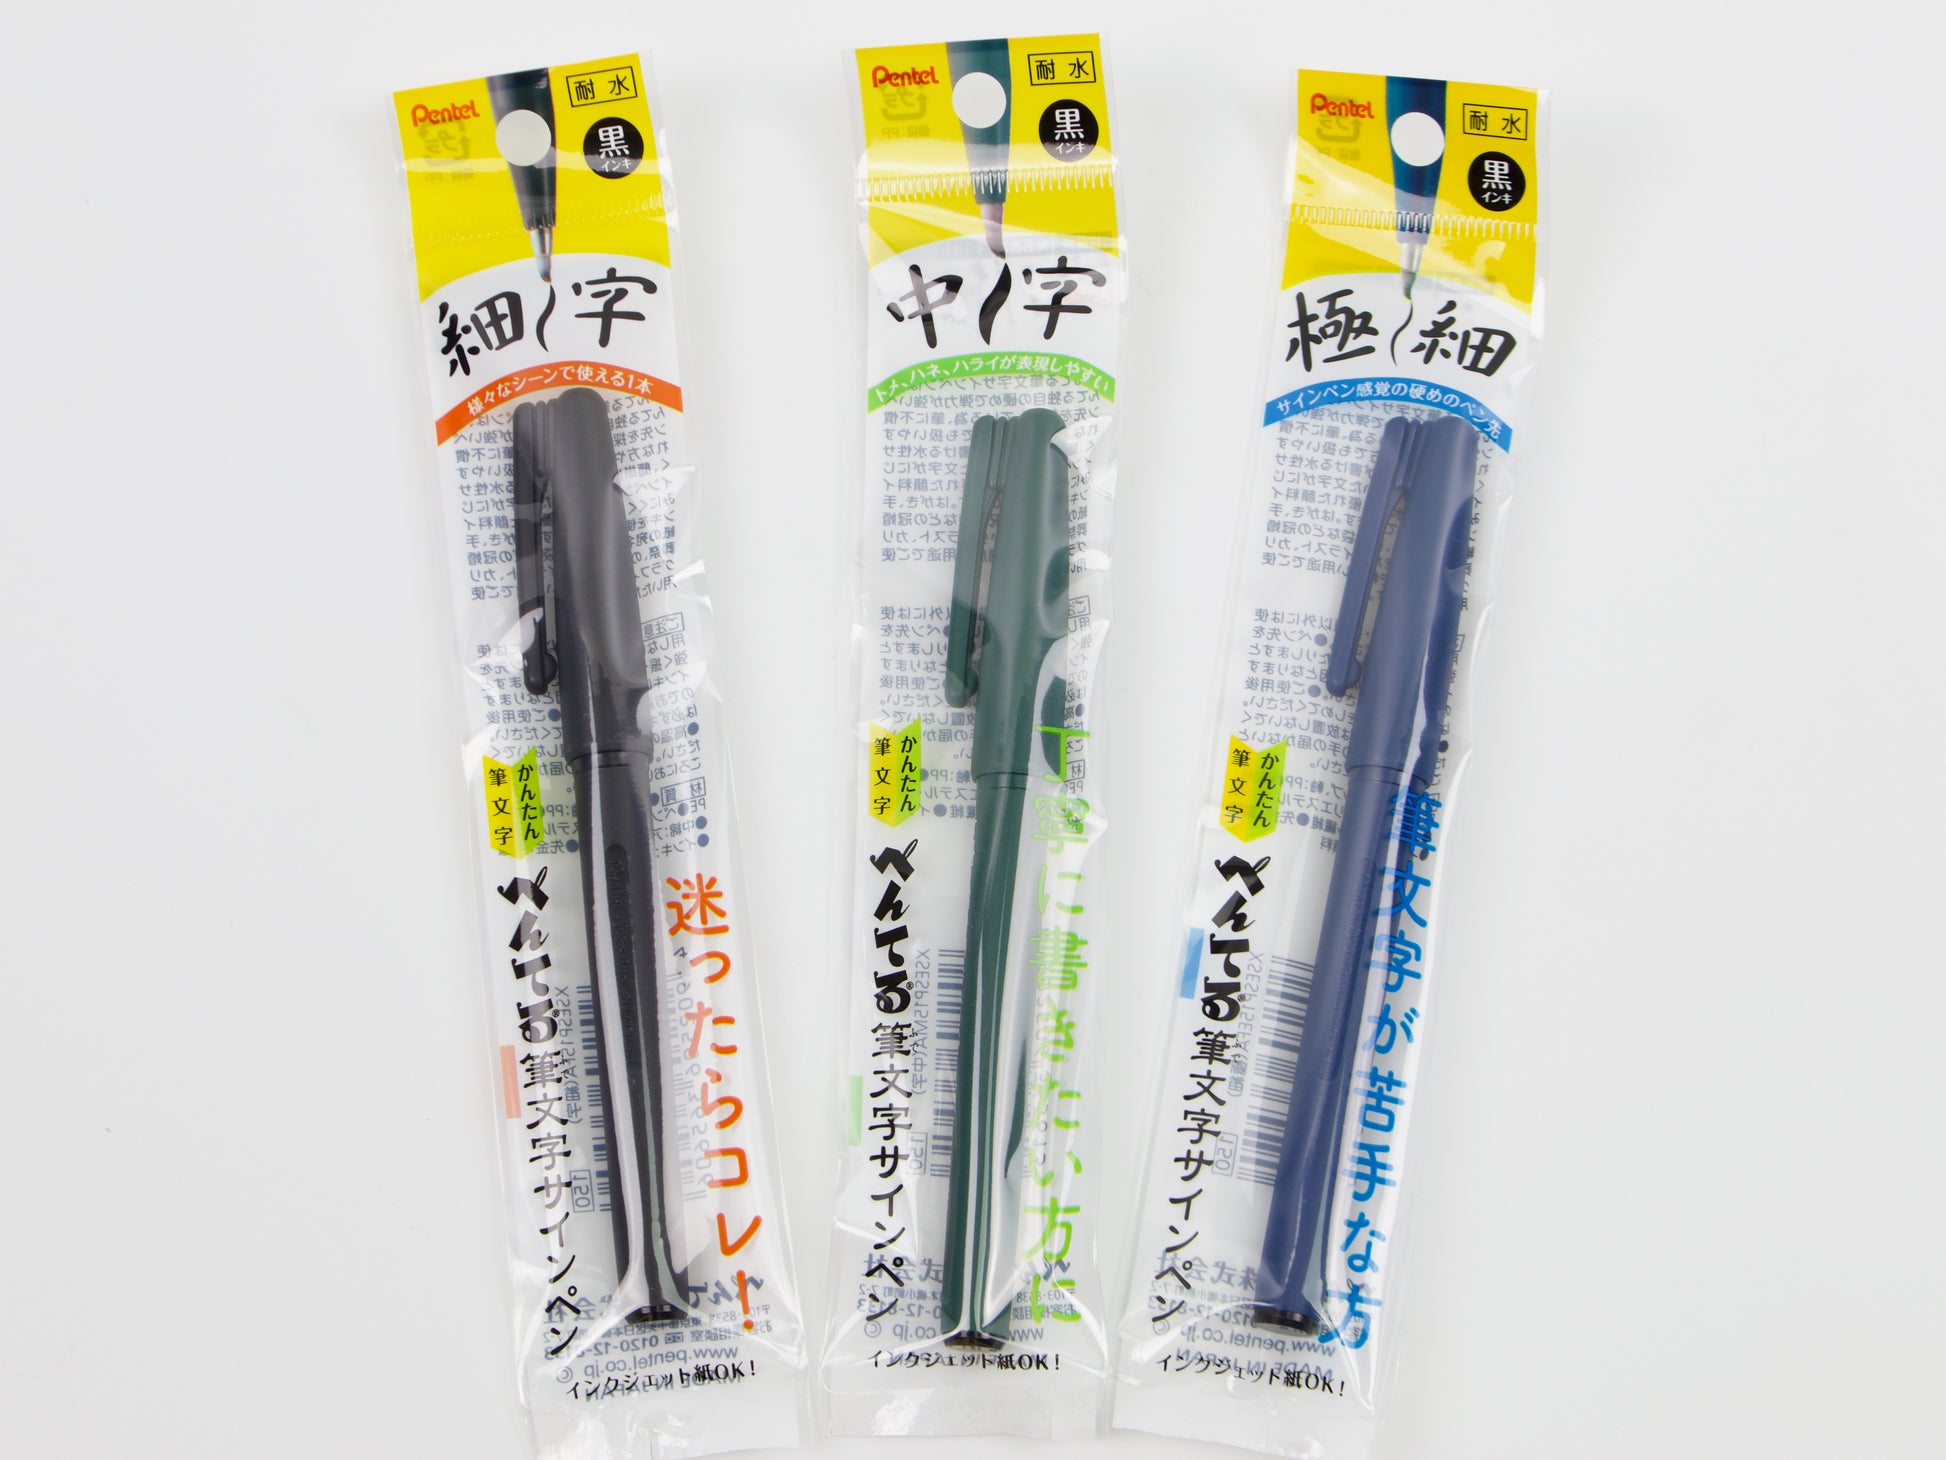 Pentel Fudemoji Sign Pen - Tokyo Pen Shop